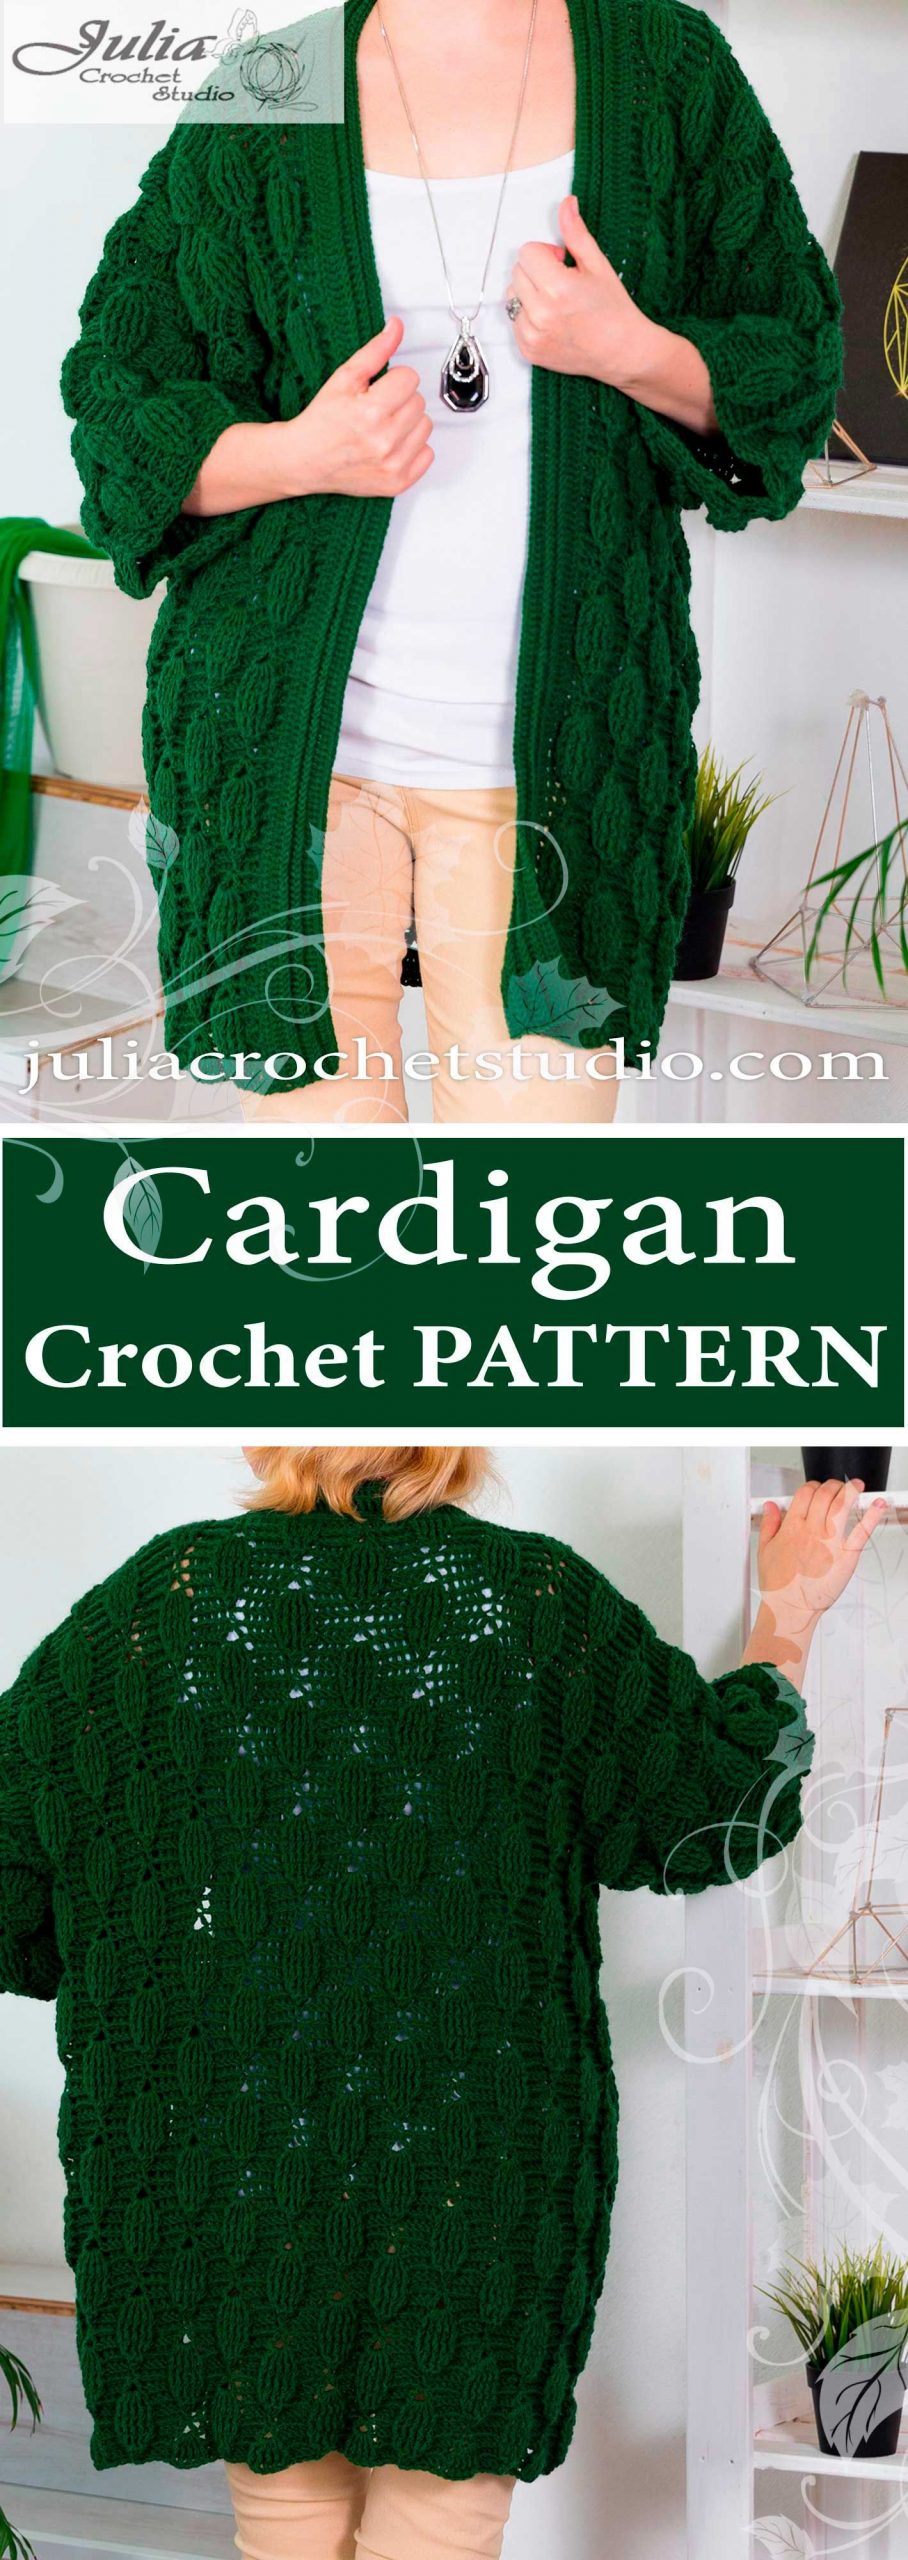 Crochet-cardigan-pattern.jpg